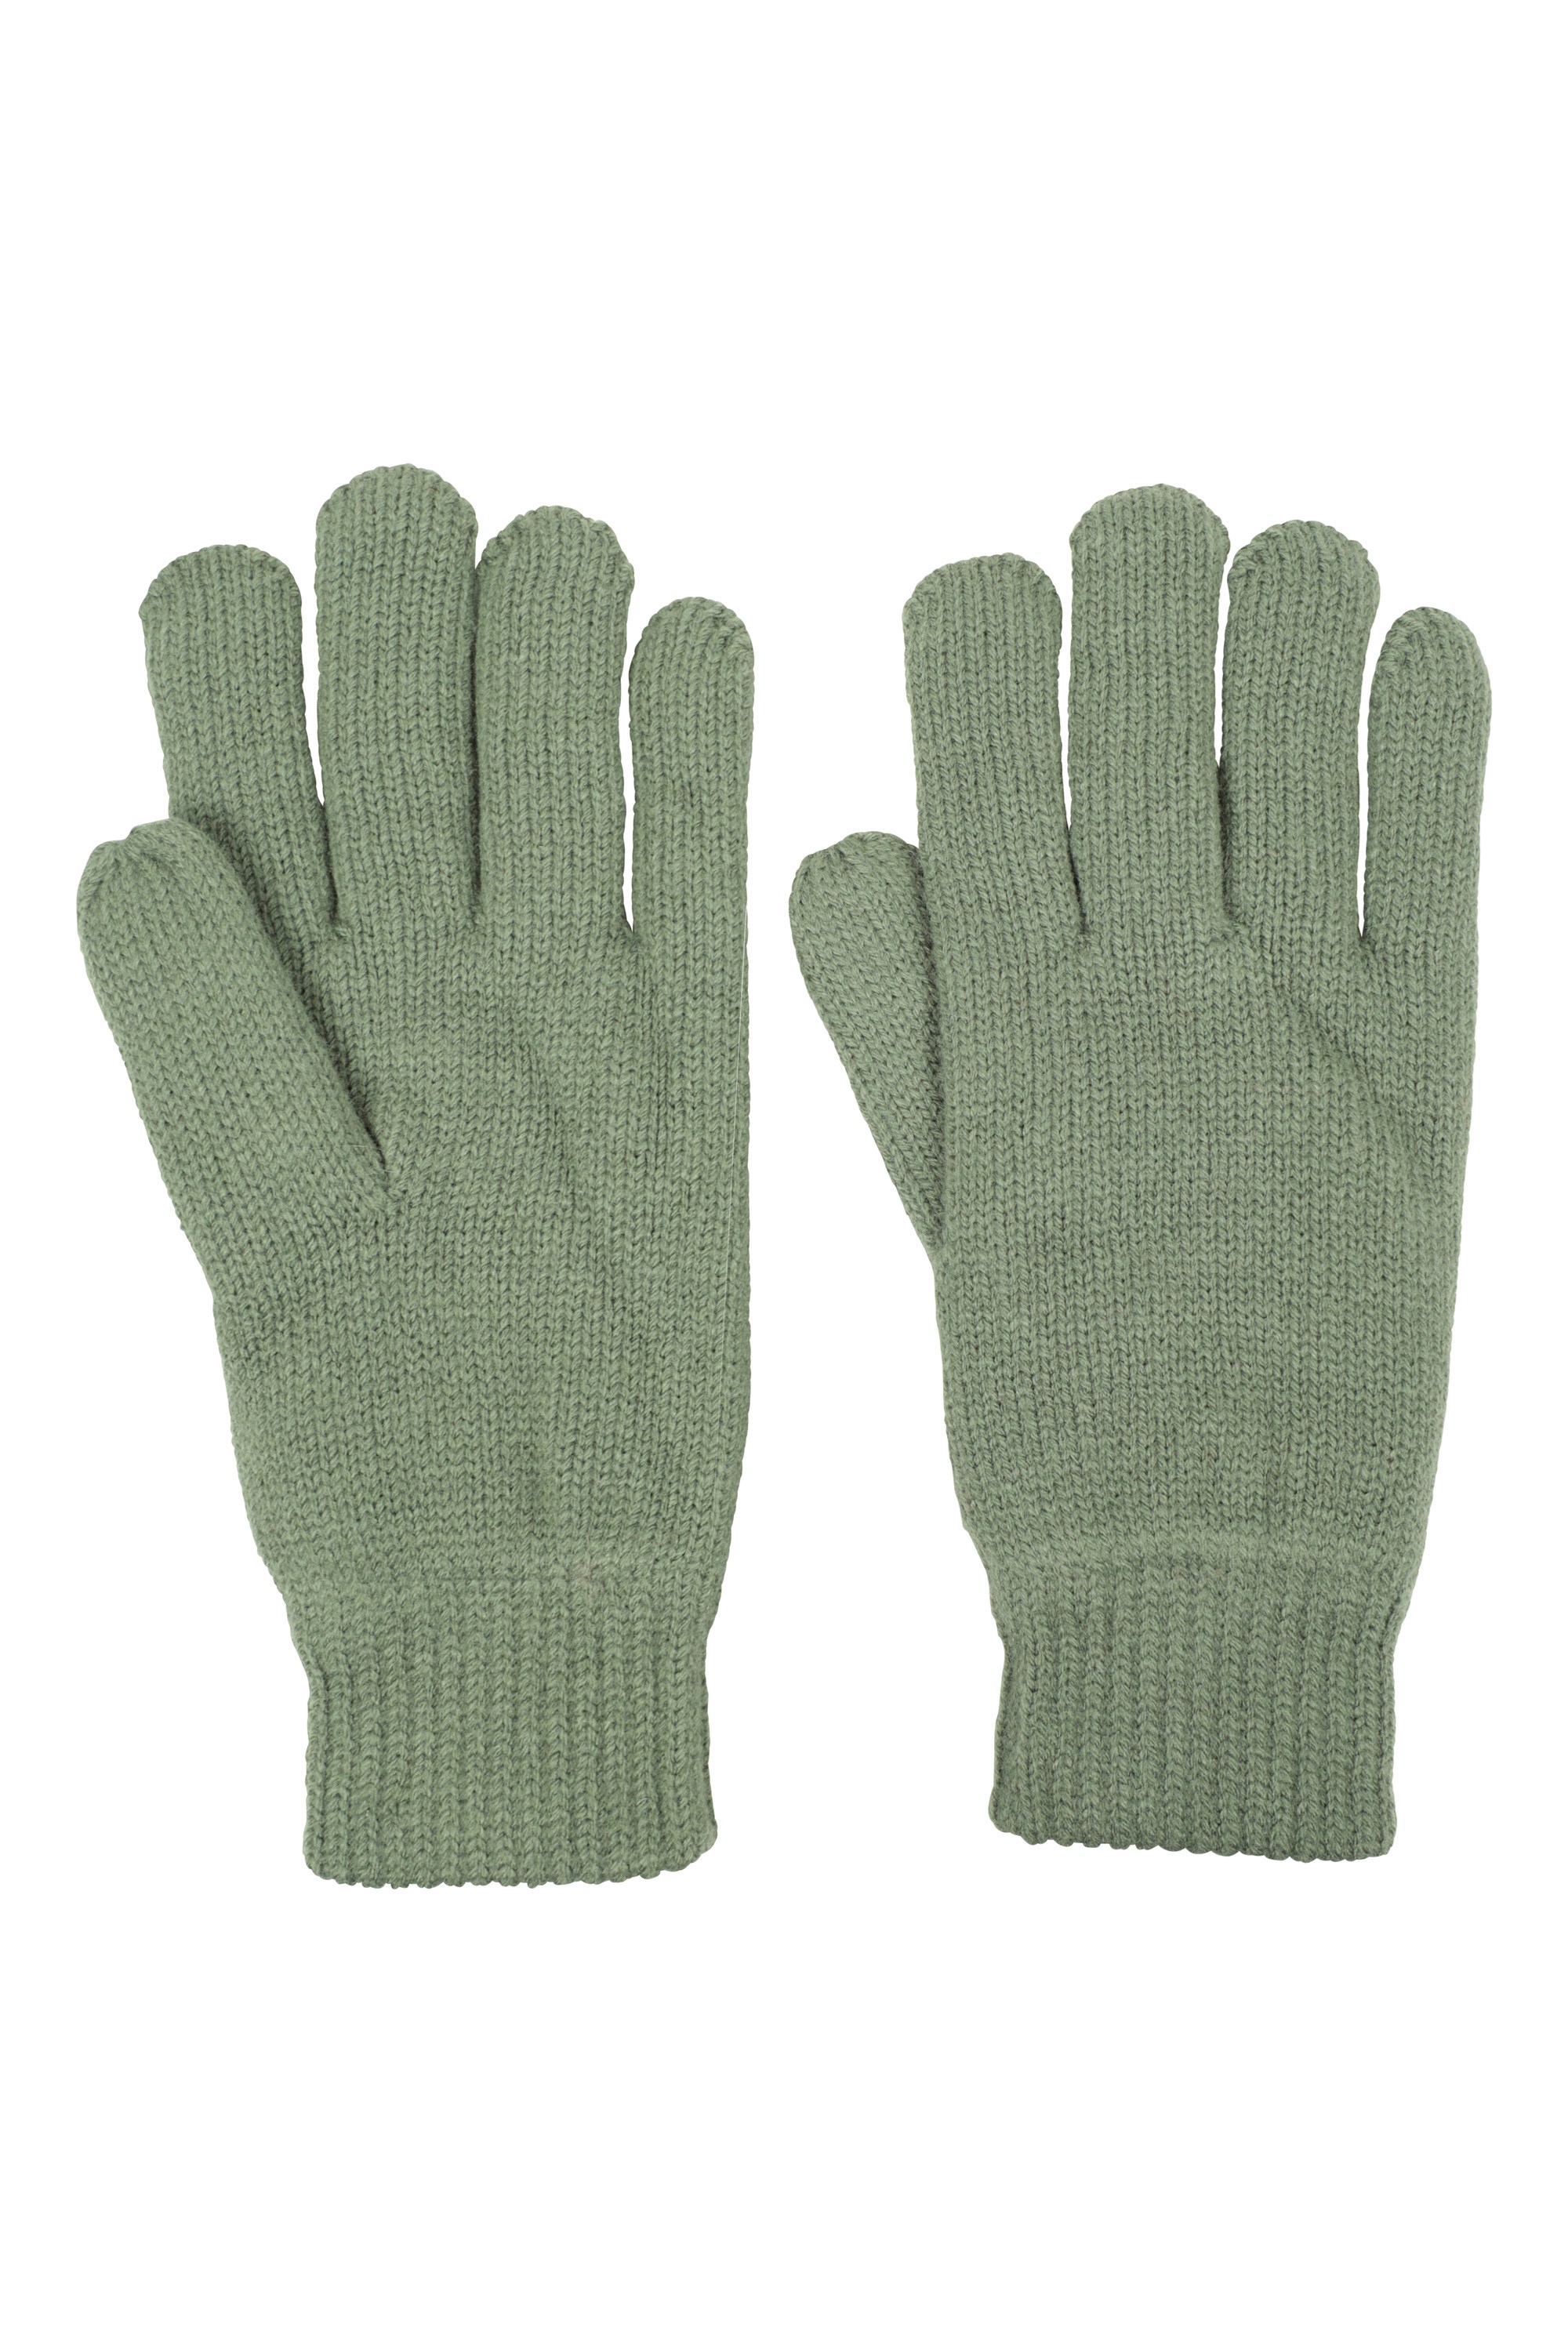 Womens Winter Thinsulate Gloves Accessories Gloves & Mittens Winter Gloves 